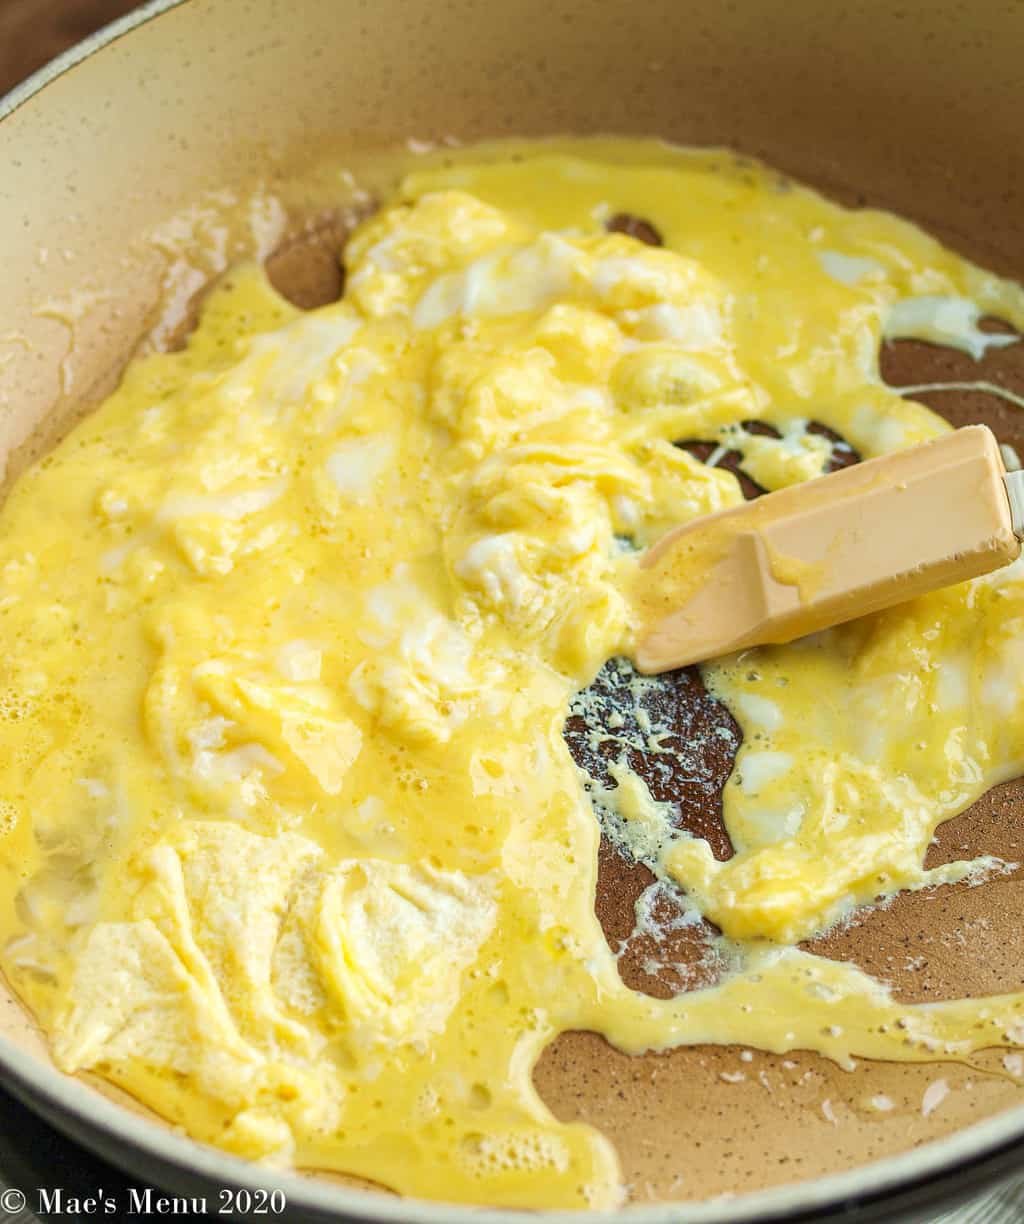 Stir-frying eggs in oil